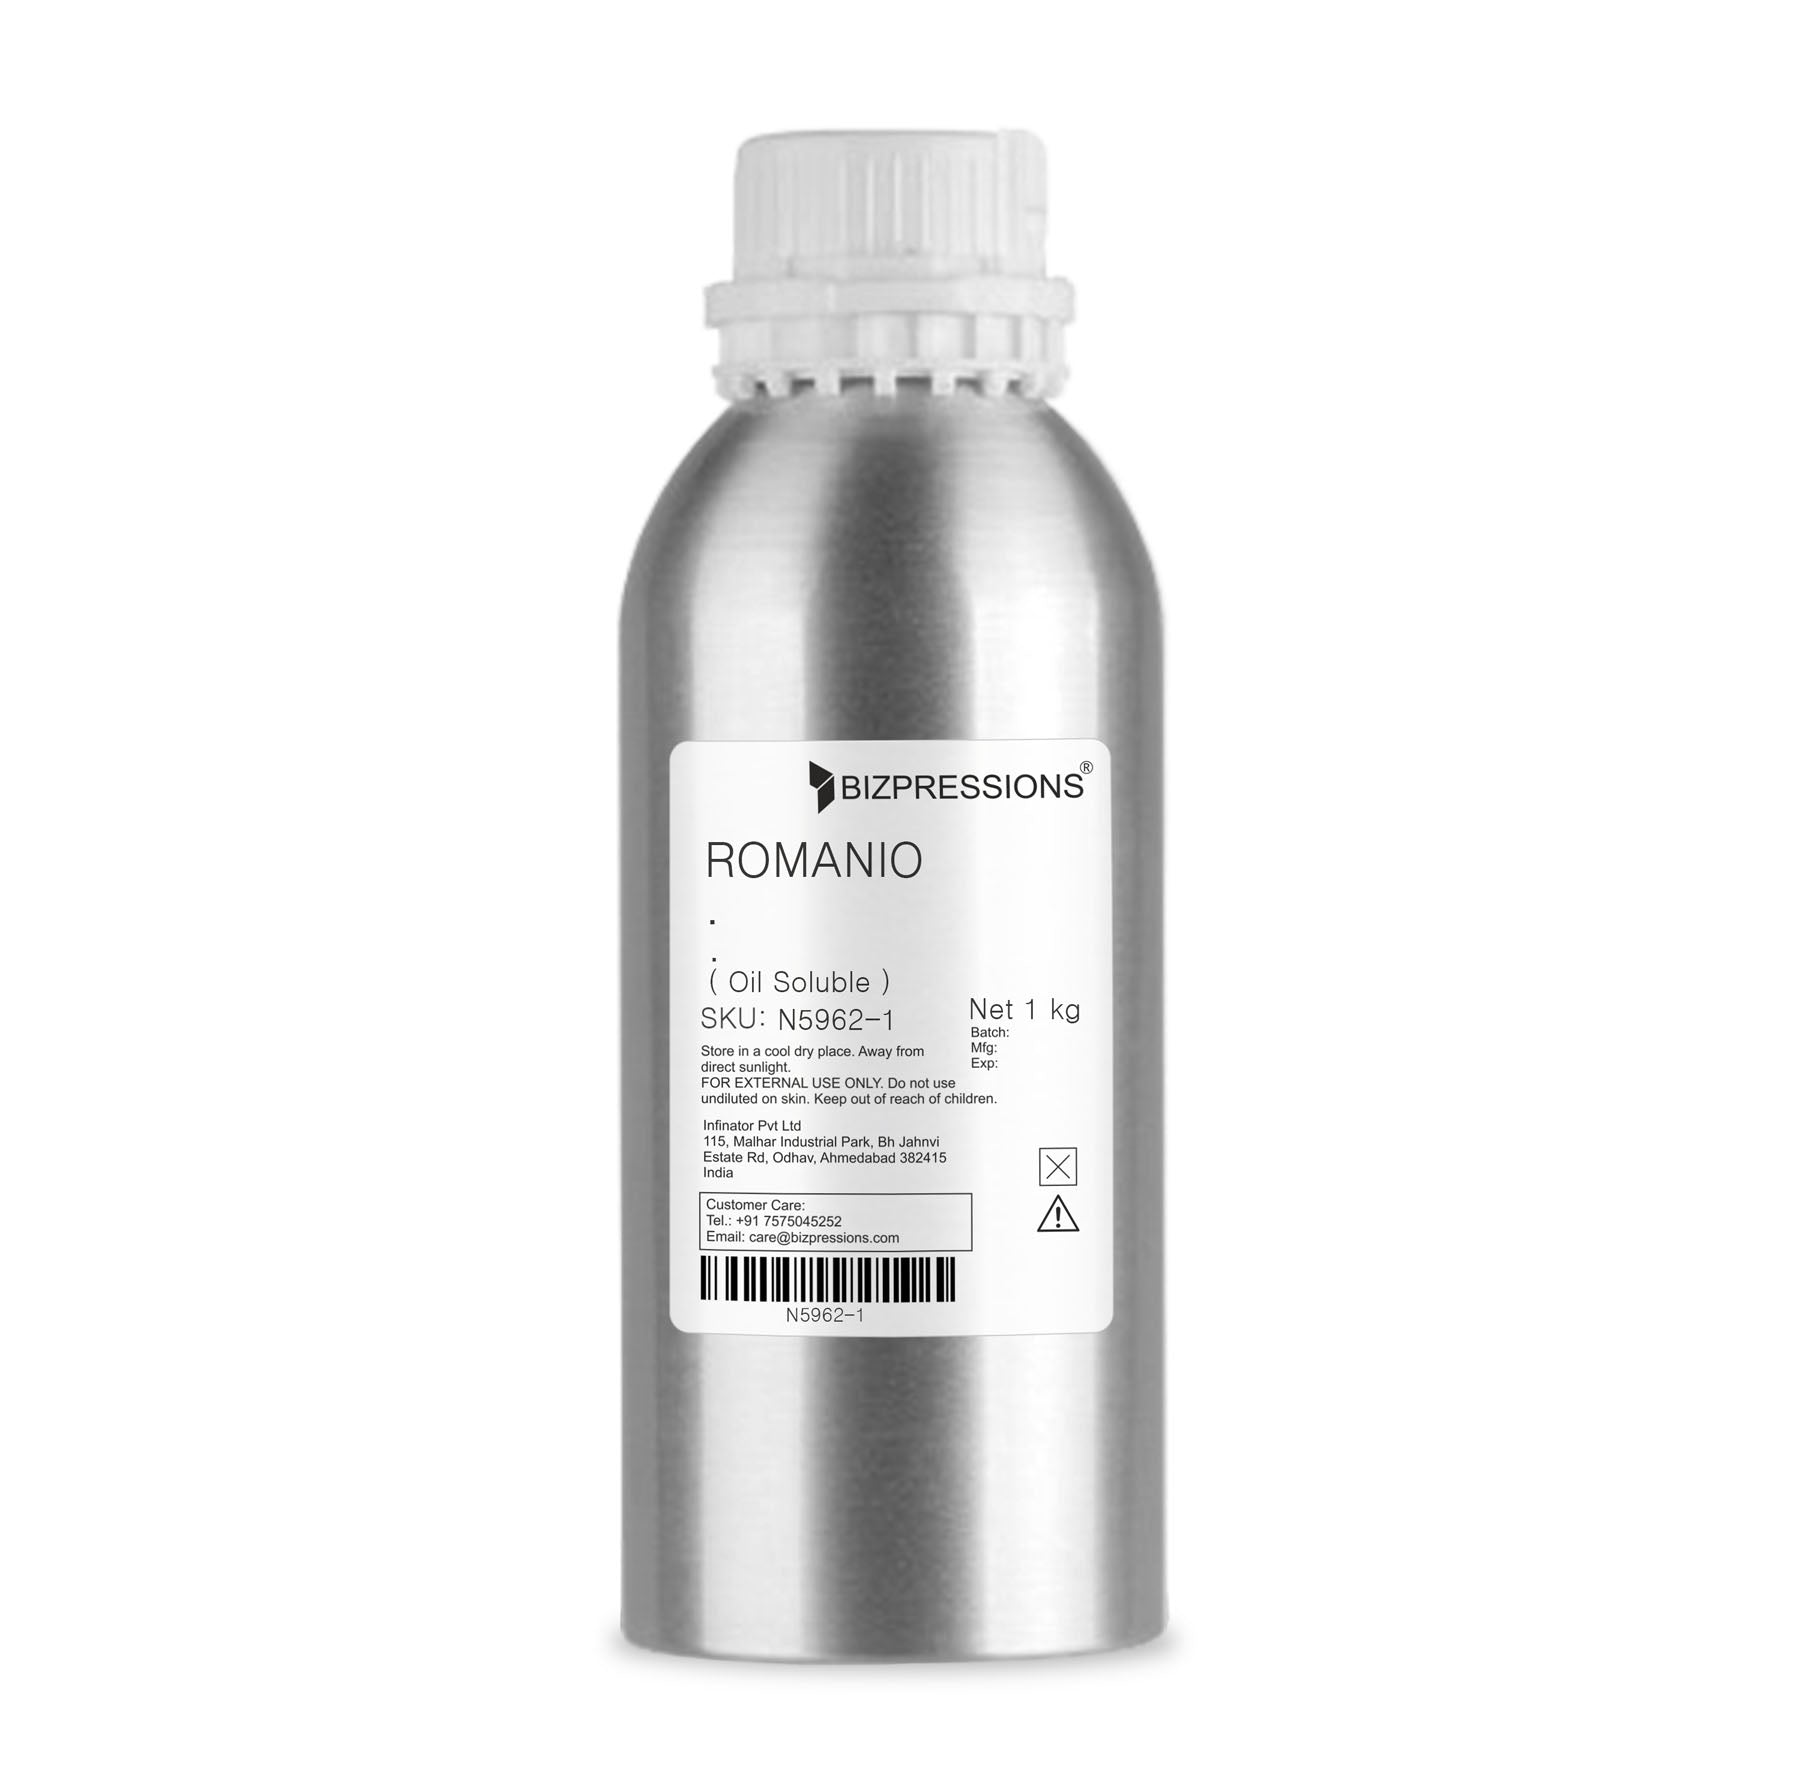 ROMANIO - Fragrance ( Oil Soluble ) - 1 kg